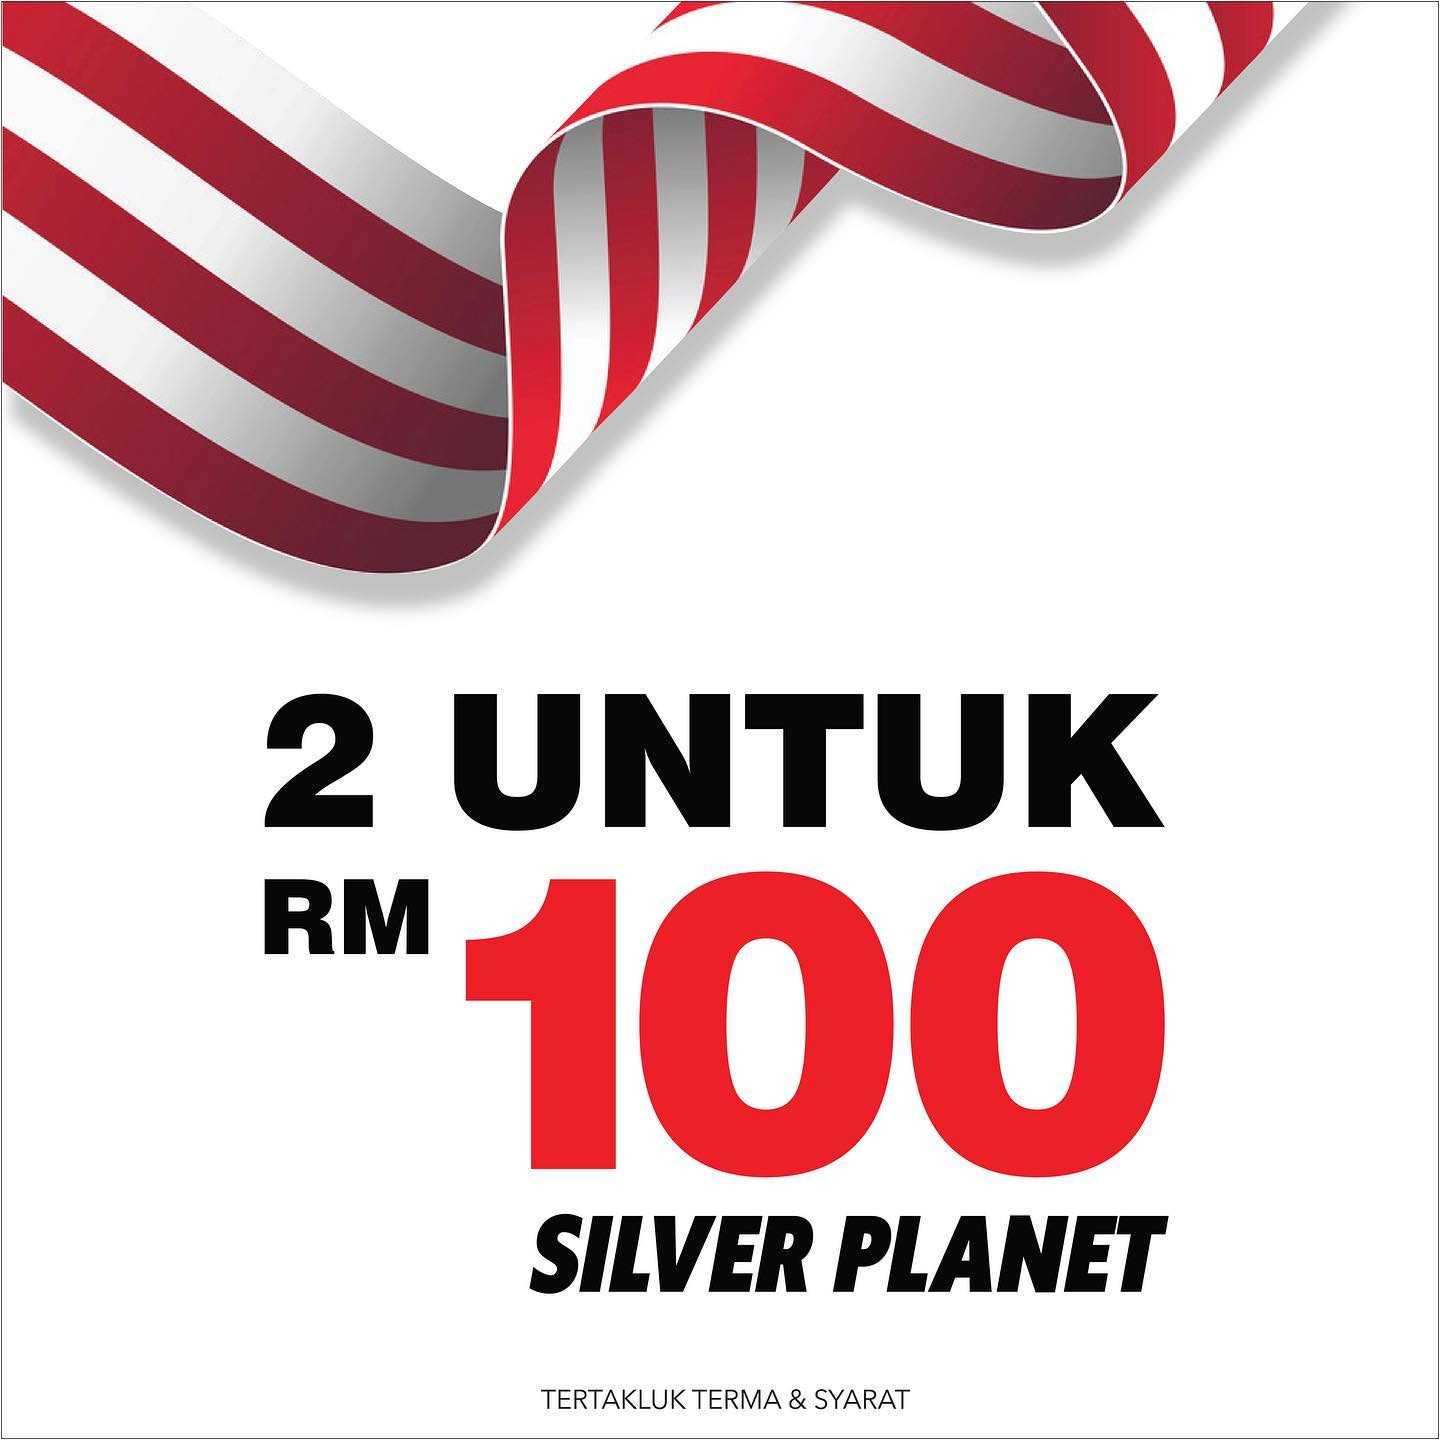 [Johor] July 30 – Aug 31, Silver Planet – 2 Untuk RM100 @ Angsana Johor Bahru Mall